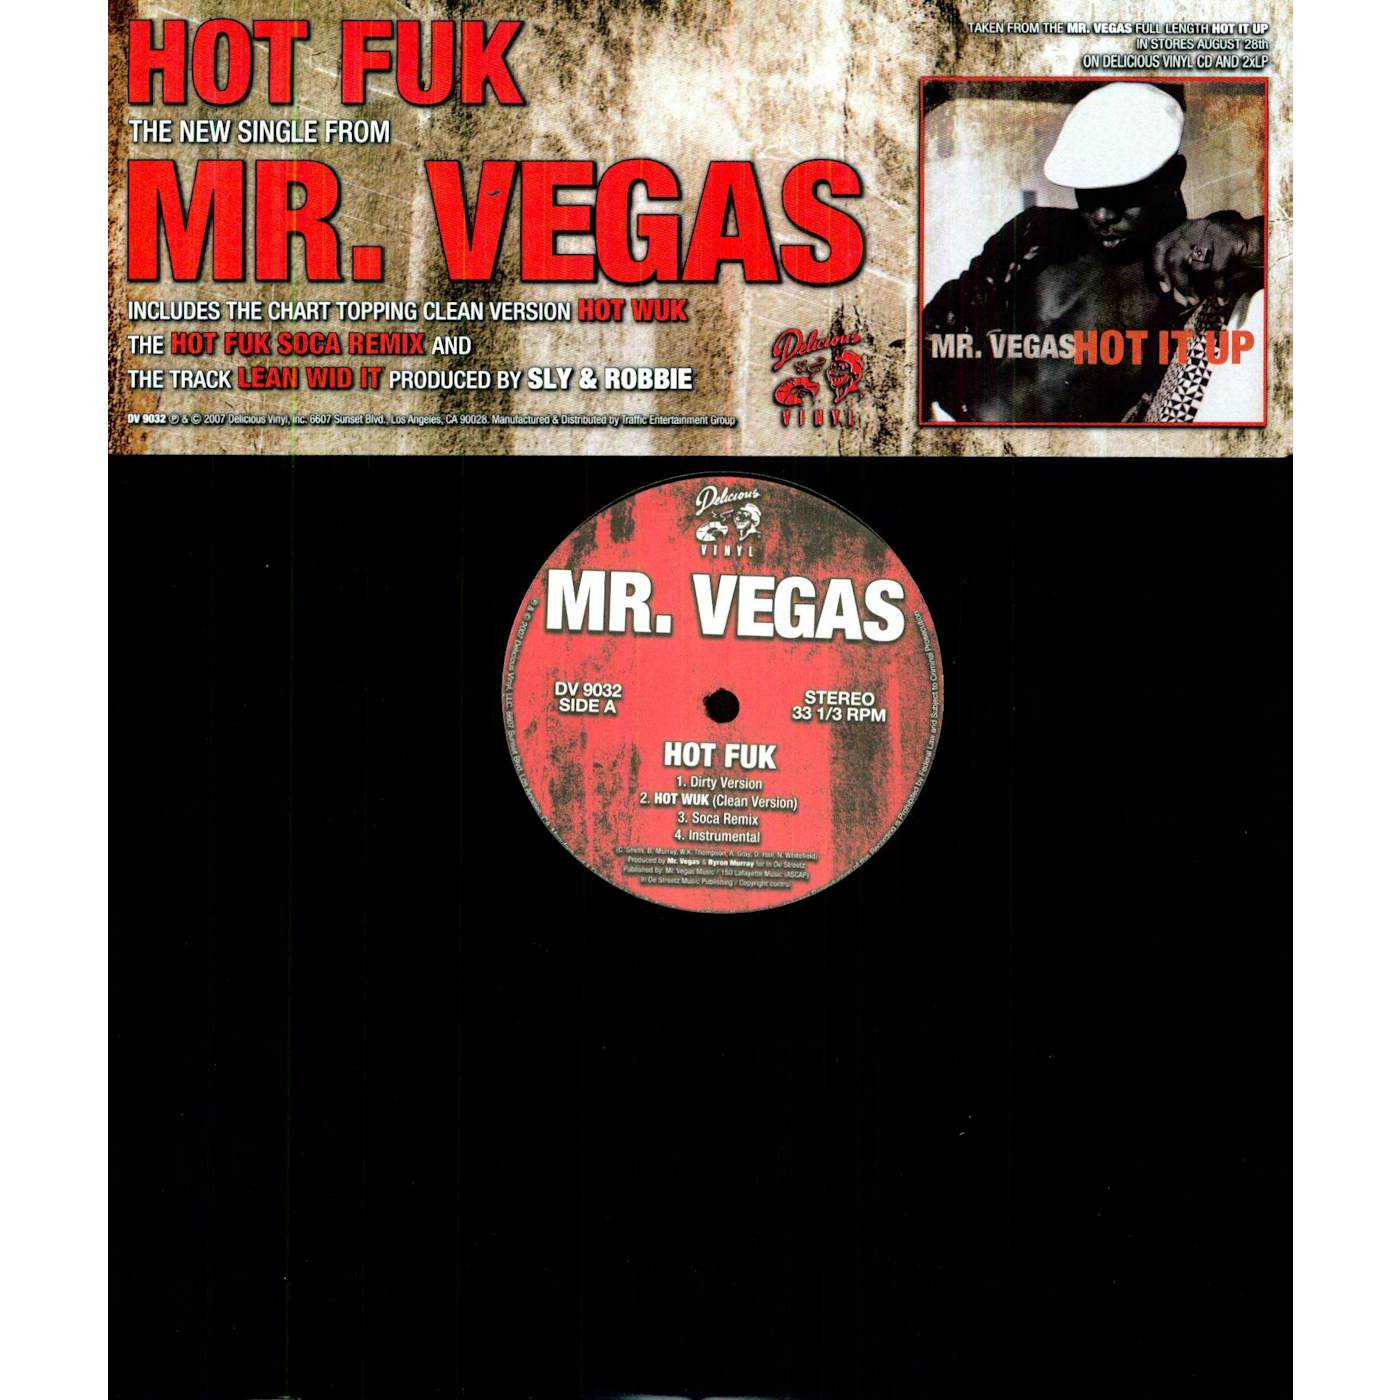 Mr. Vegas HOT FUK / LEAN WID IT Vinyl Record